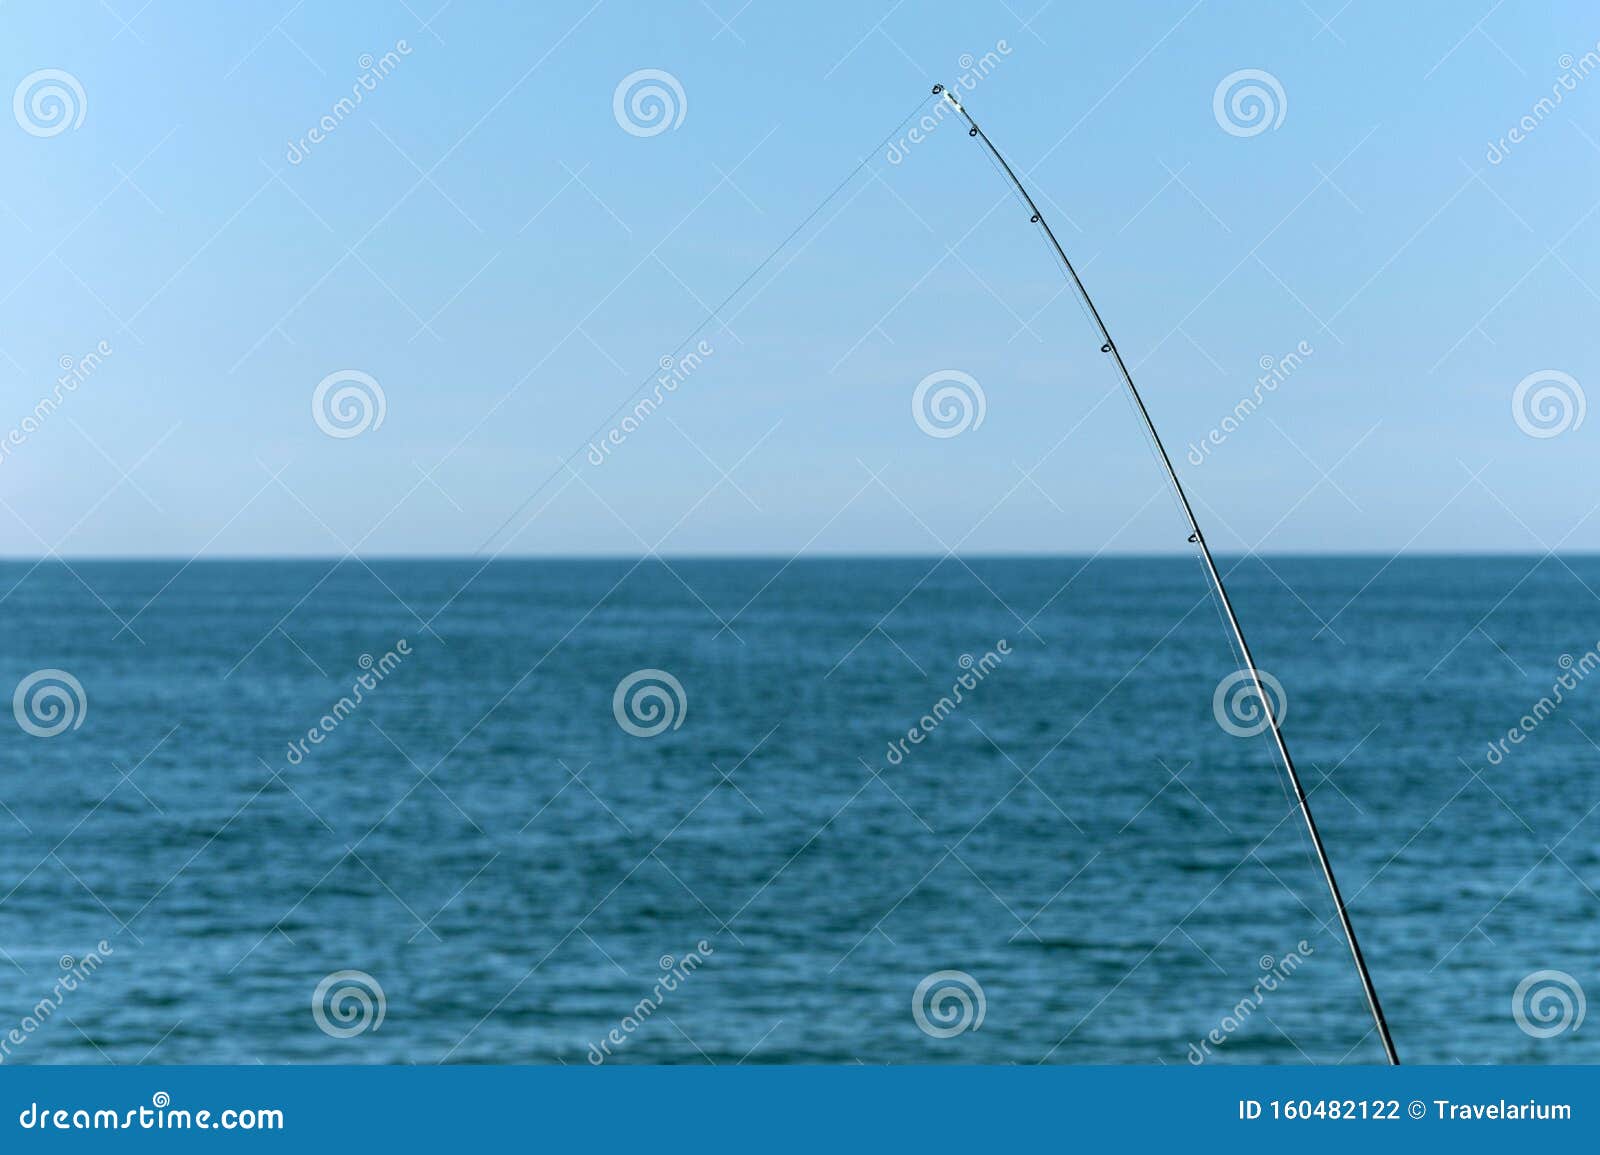 https://thumbs.dreamstime.com/z/fishing-rod-against-blue-ocean-sea-background-copy-space-waiting-biggest-haul-meditative-relax-sport-fishing-rod-against-160482122.jpg